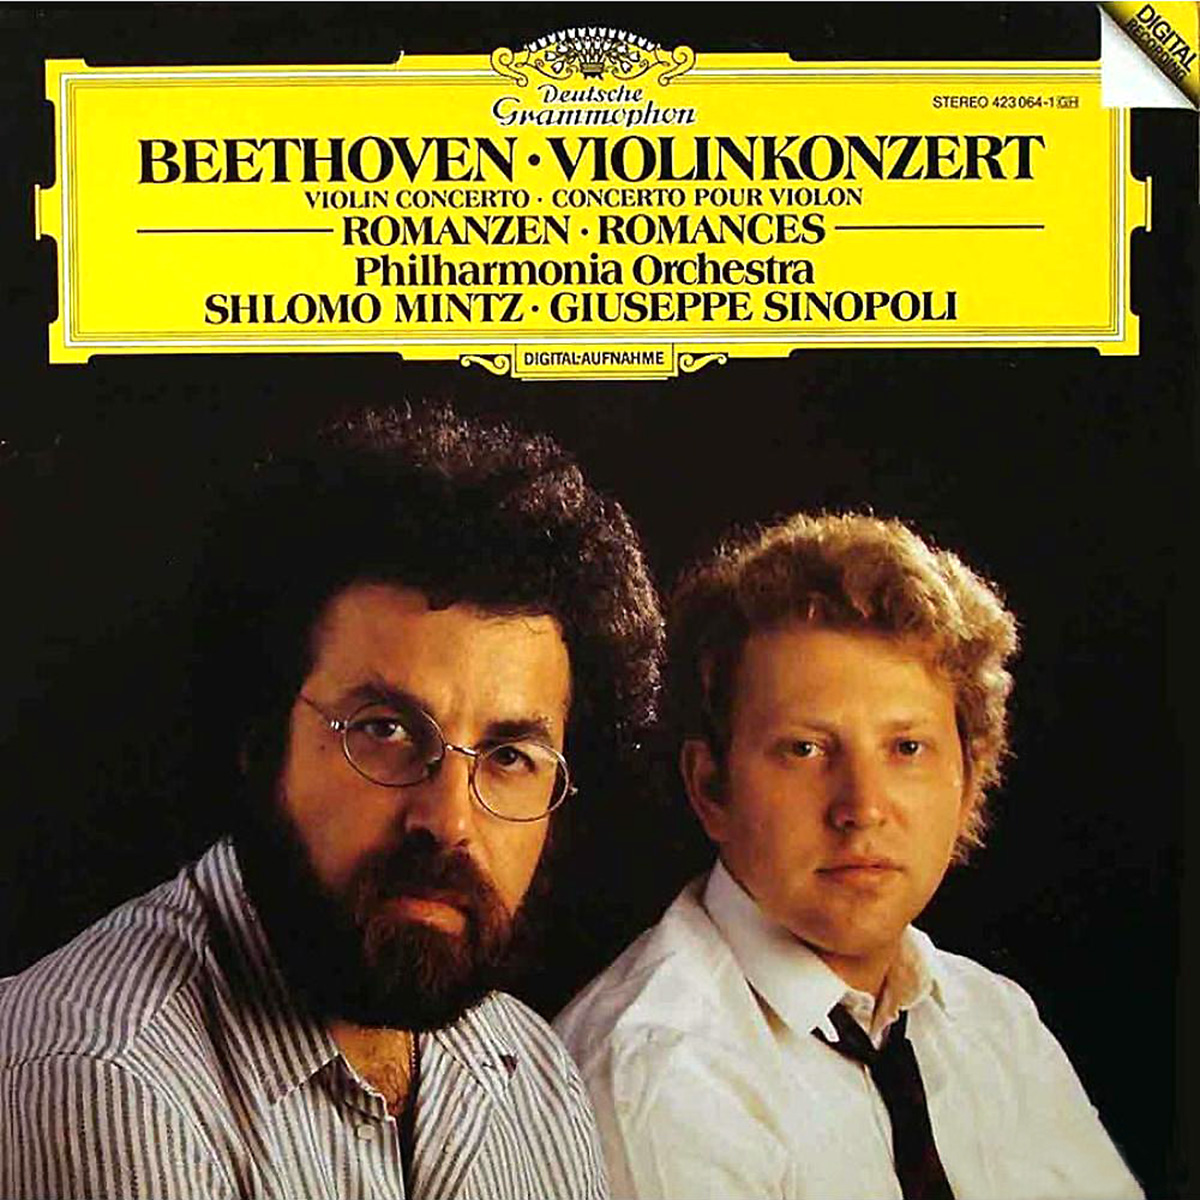 DGG 423 064 Beethoven Concerto Violon Romance Mintz Sinopoli DGG Digital Aufnahme